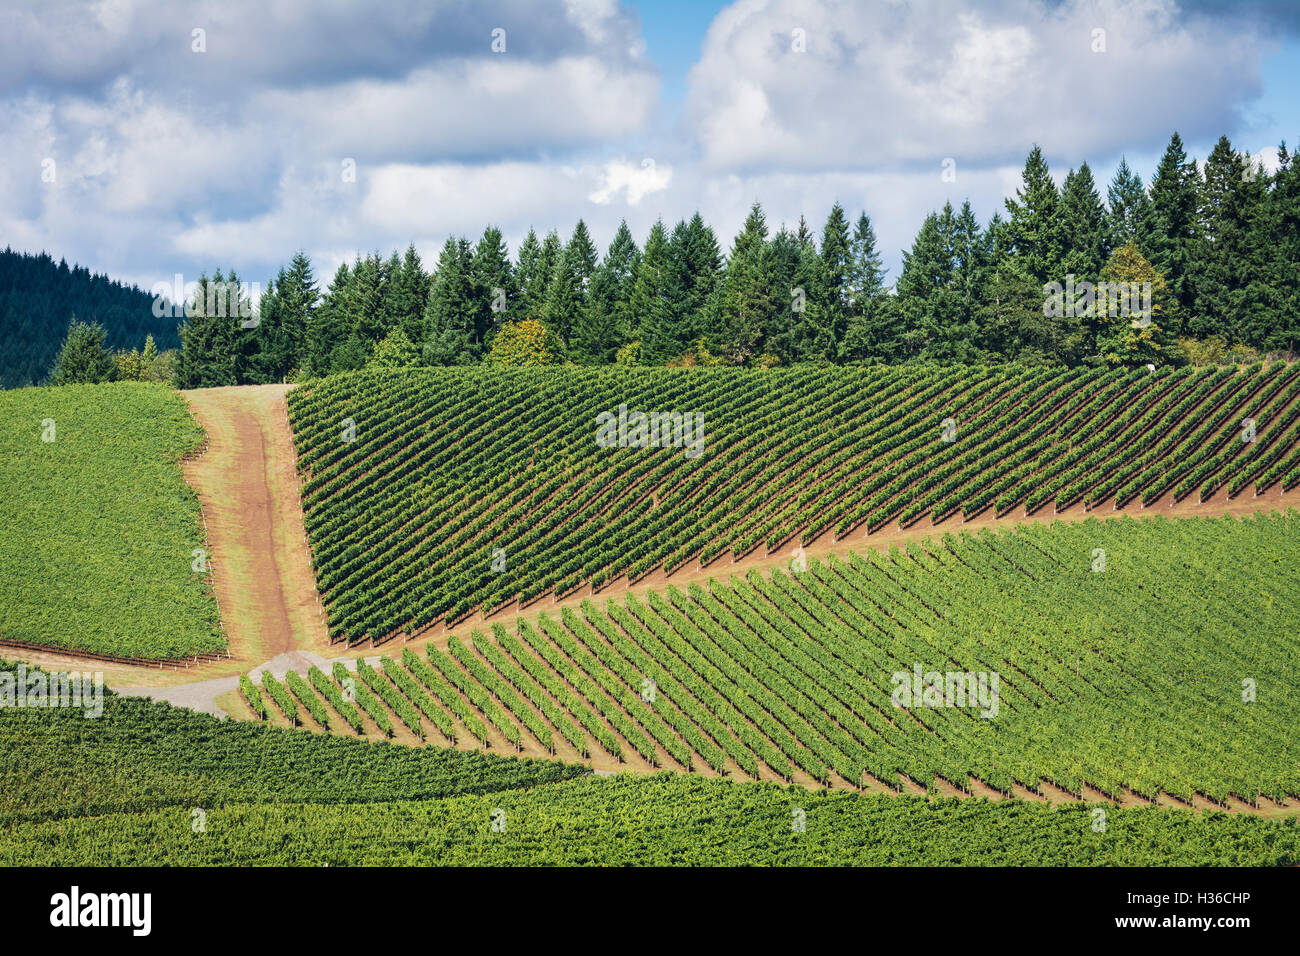 King Estate vineyards, Lorane Valley, Oregon. Stock Photo